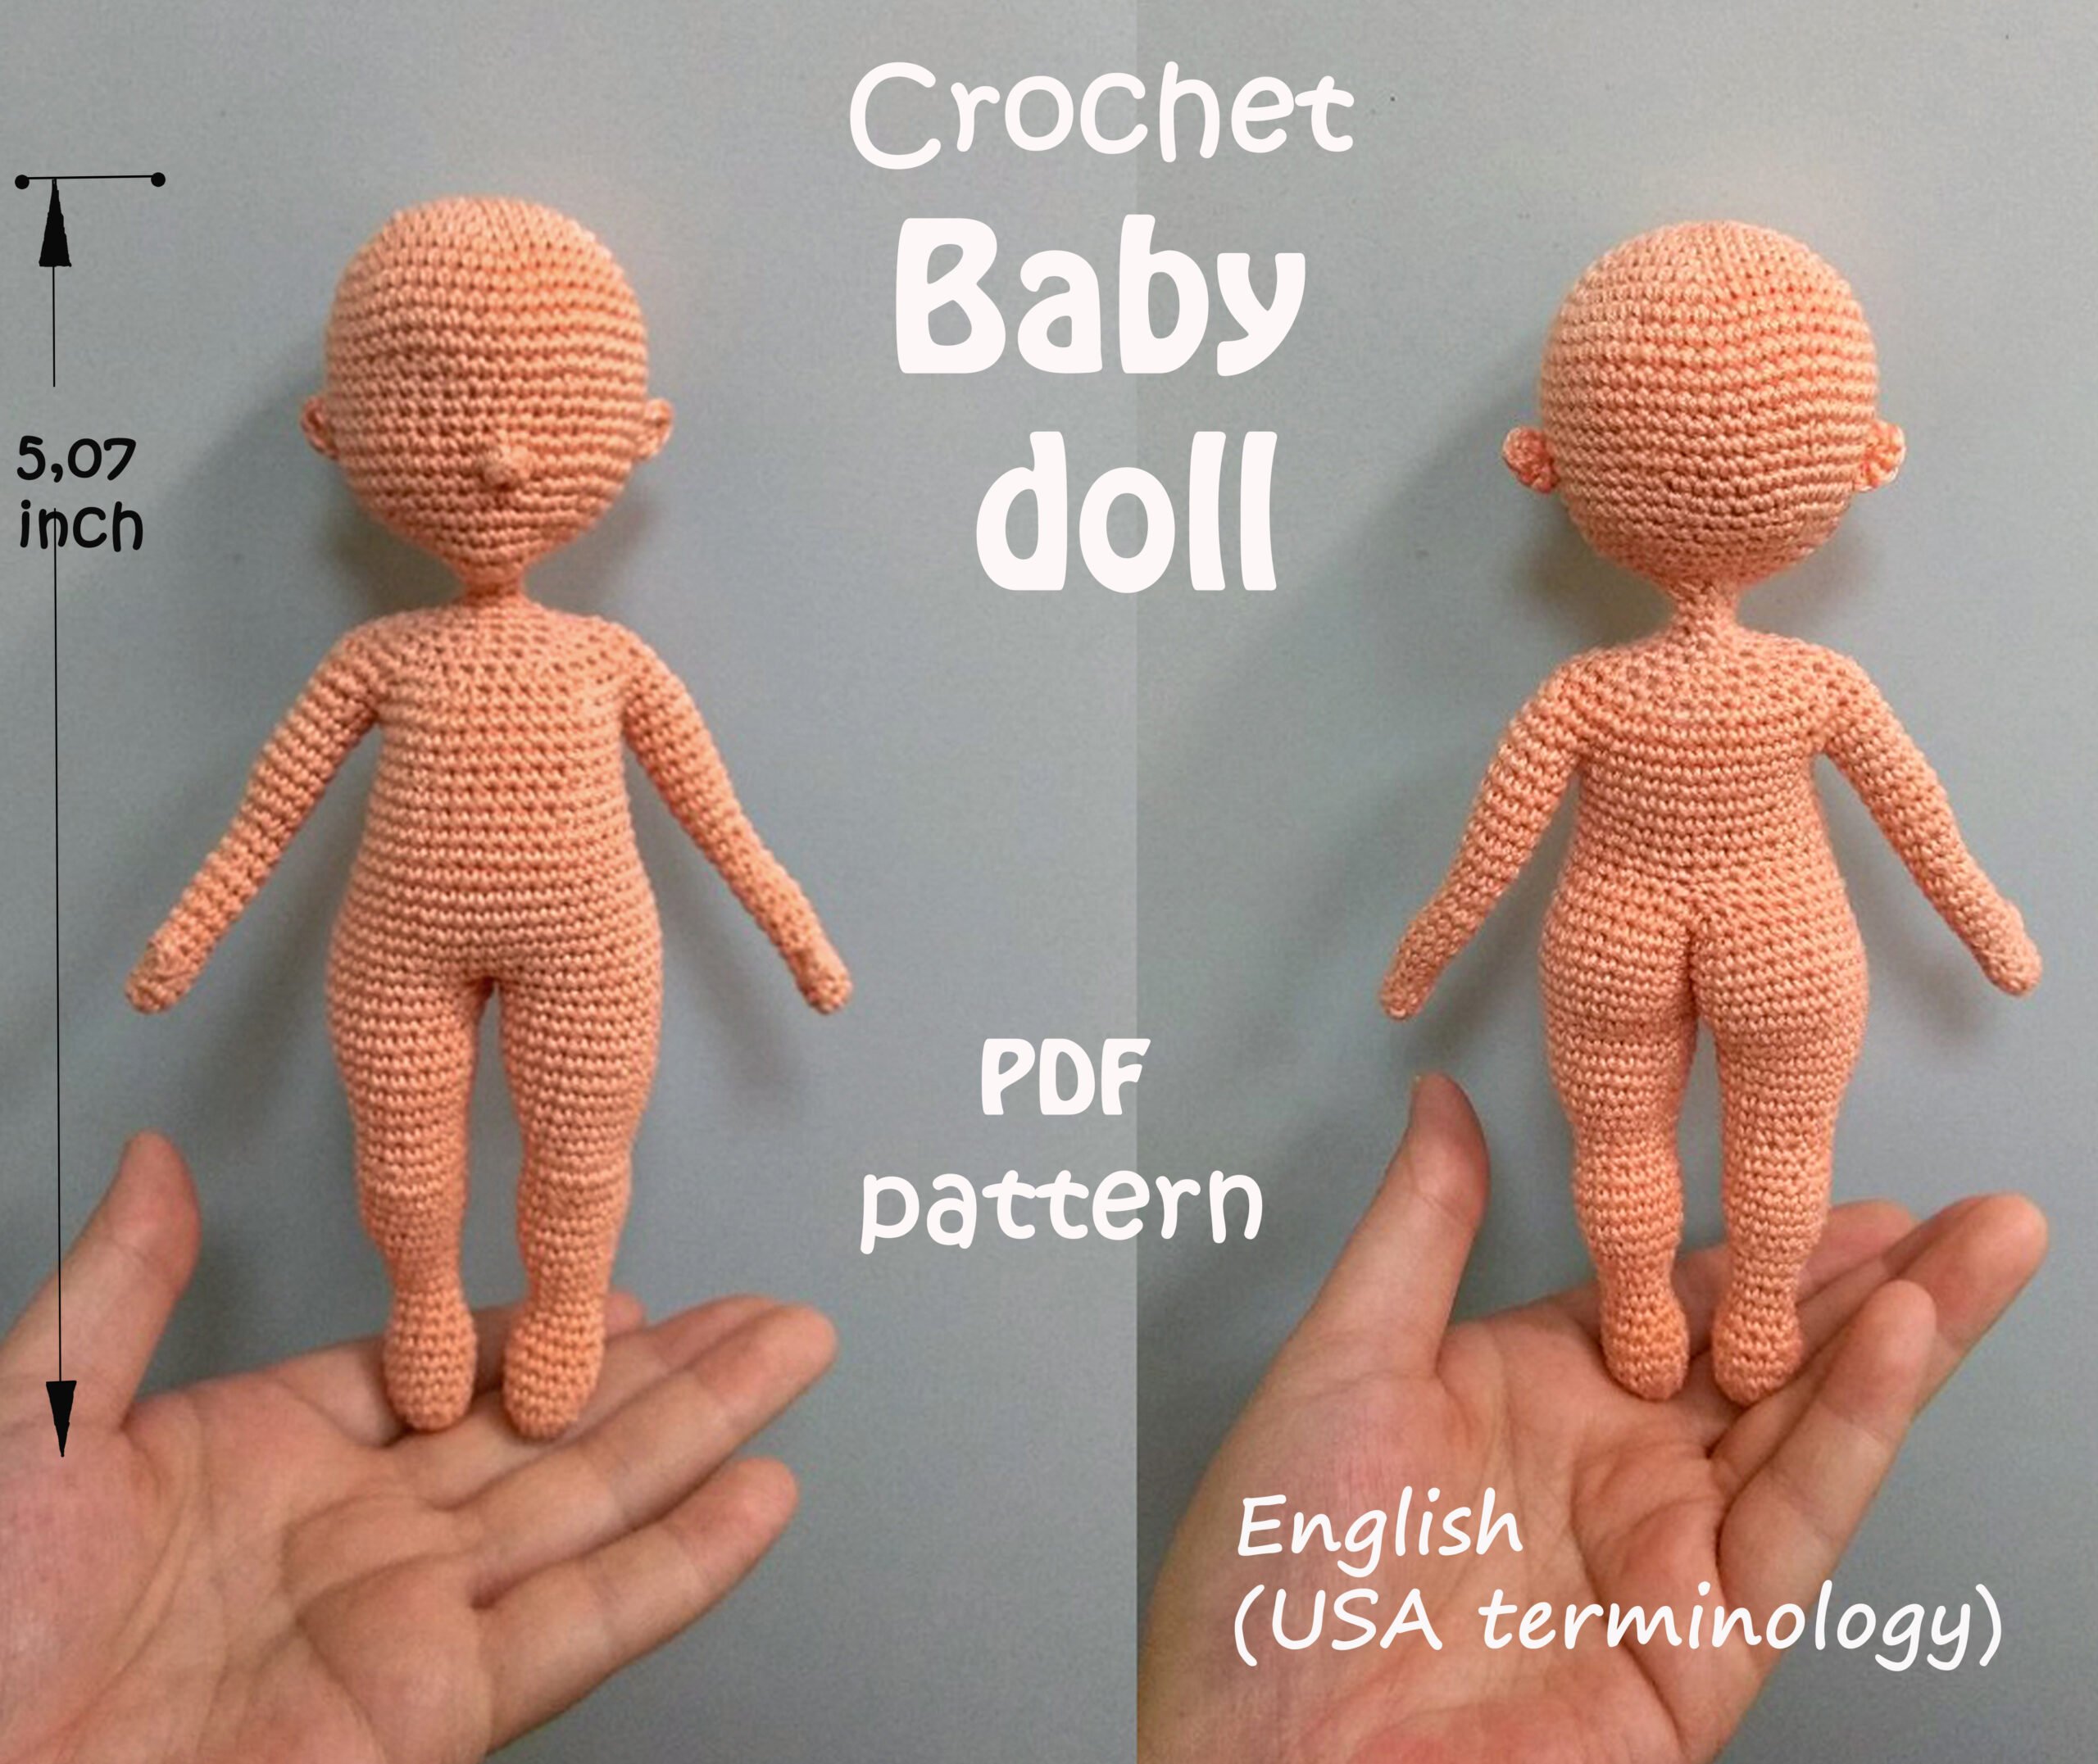 Crochet Baby doll pattern - DailyDoll Shop